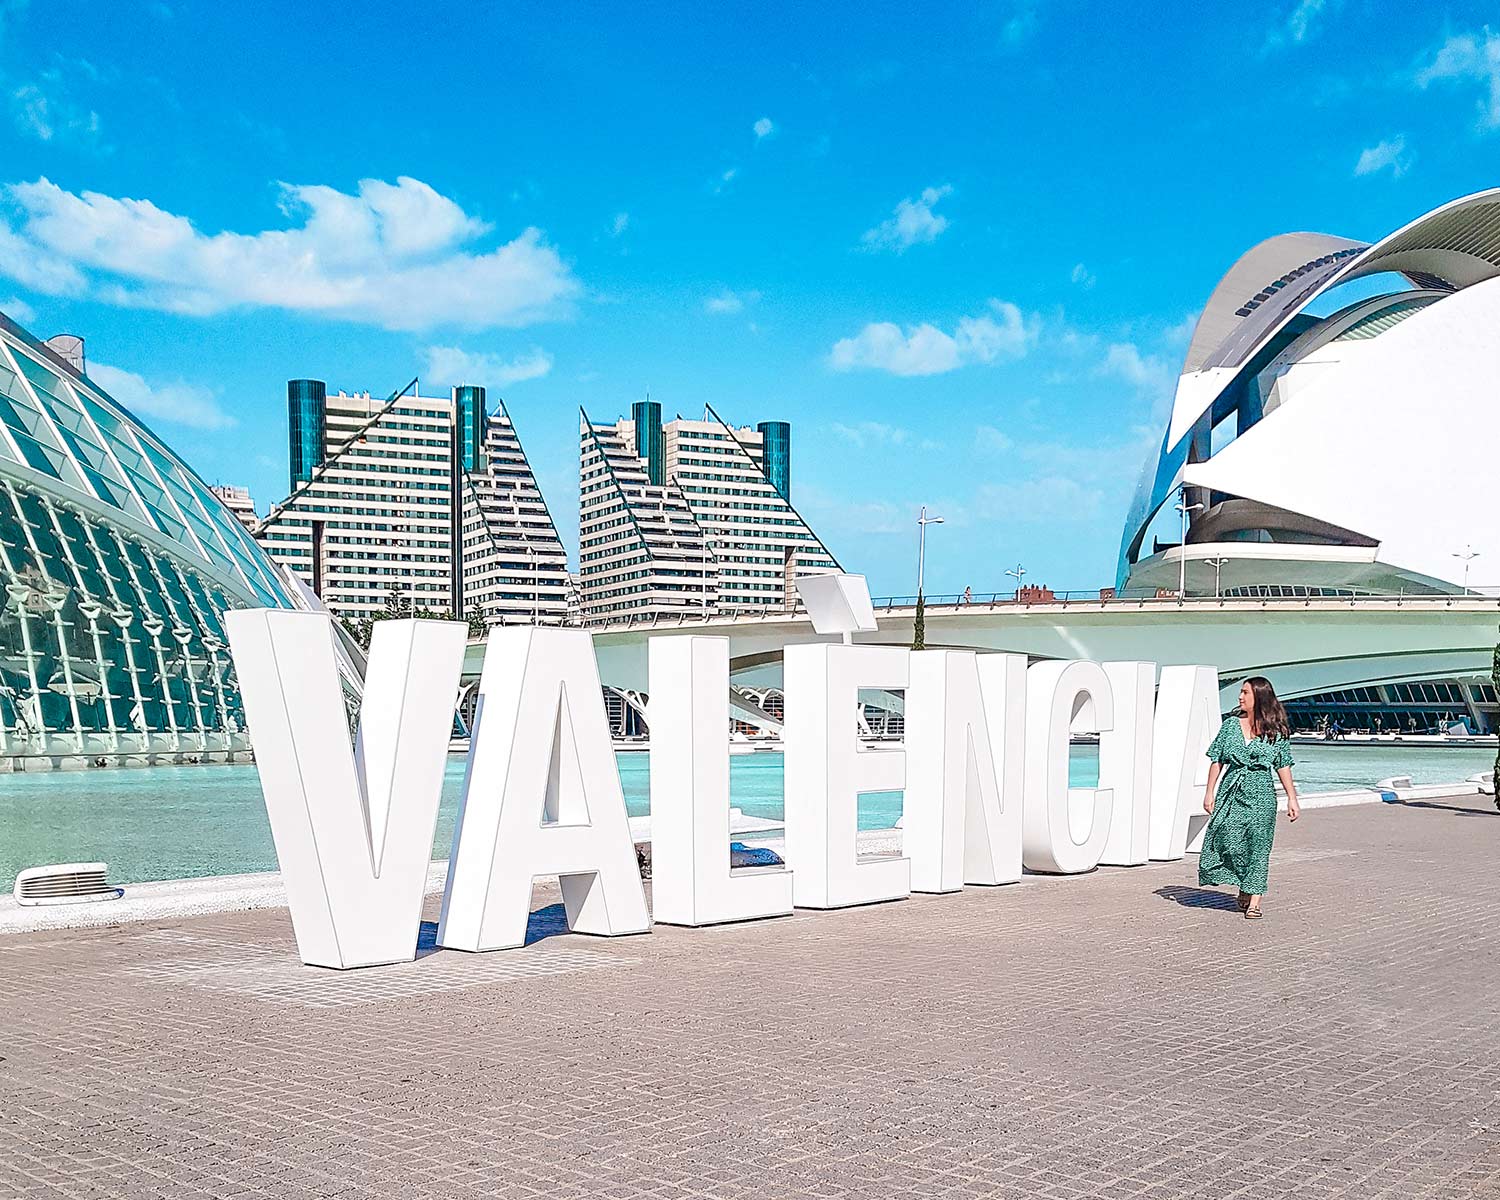 Qué ver en Valencia en 3 días, imprescindibles + itinerario